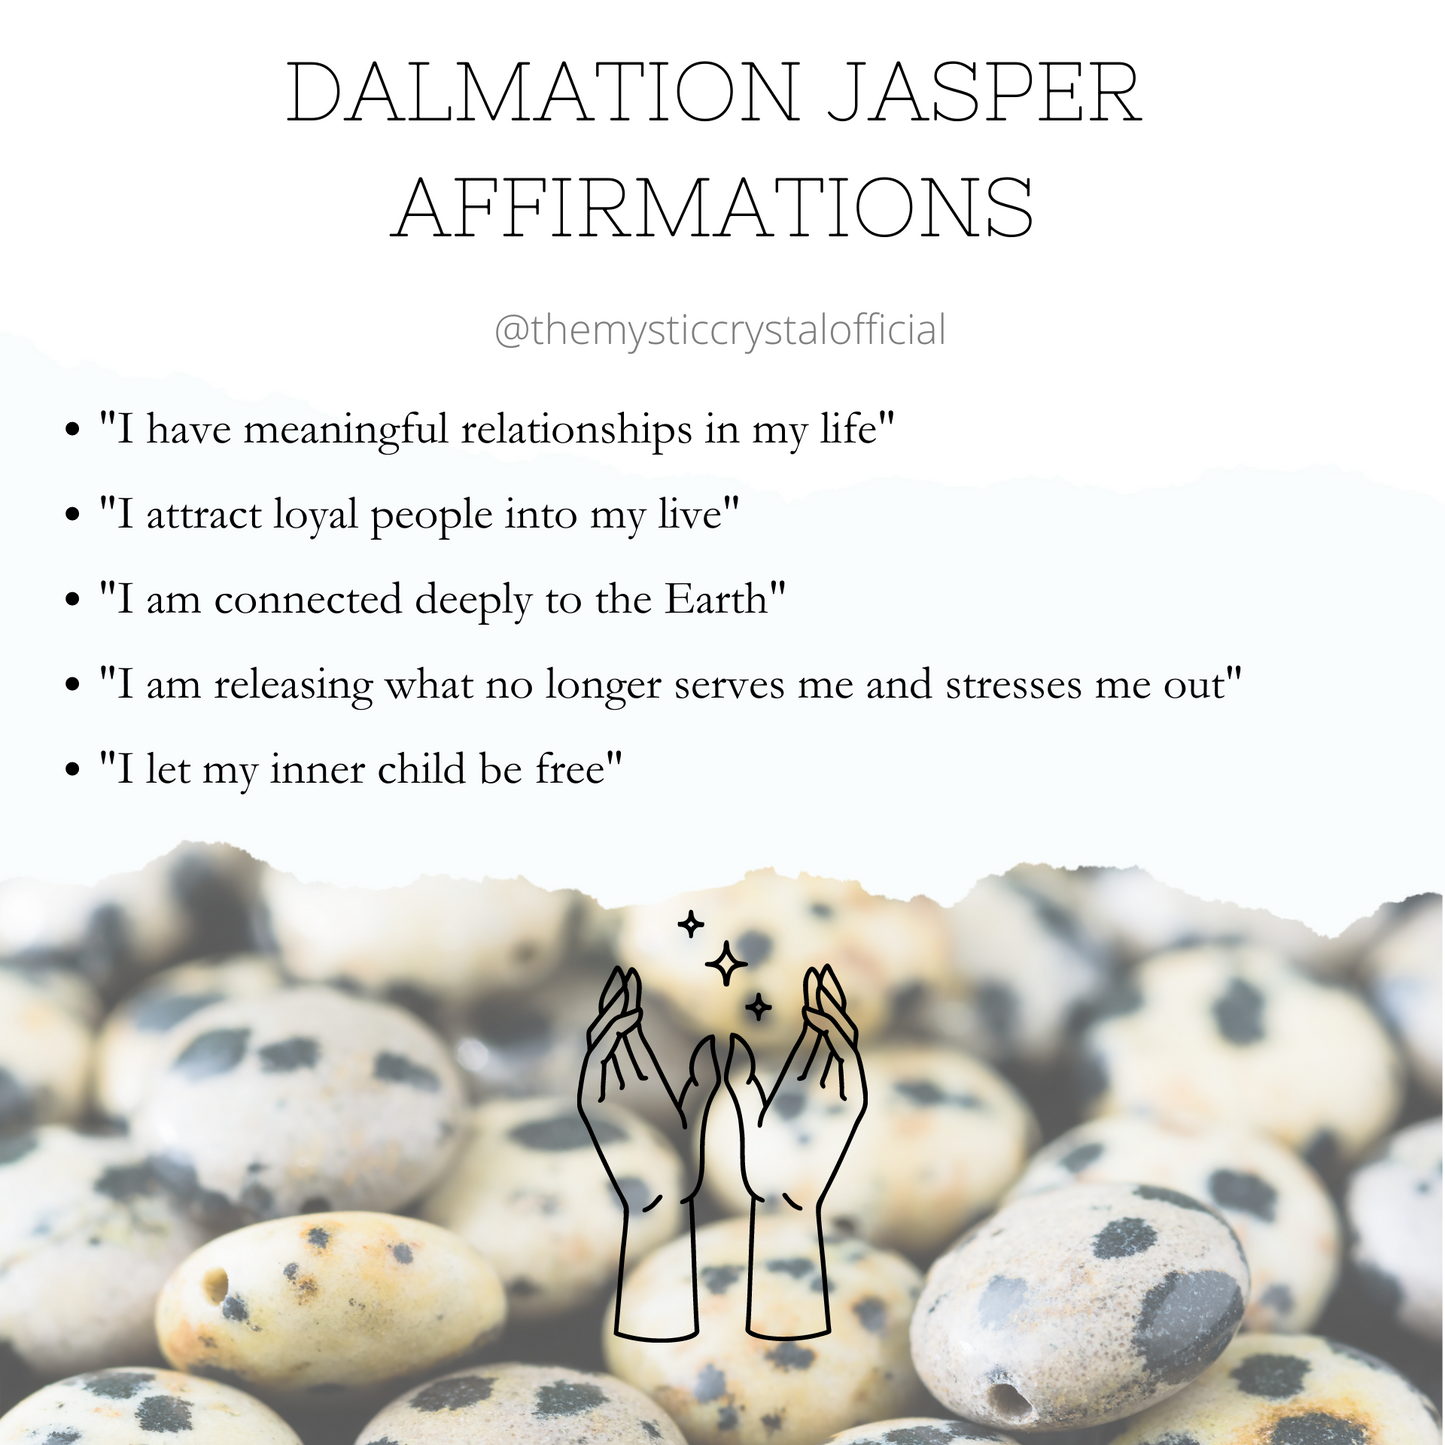 Dalmatian Jasper Small Round Bracelet